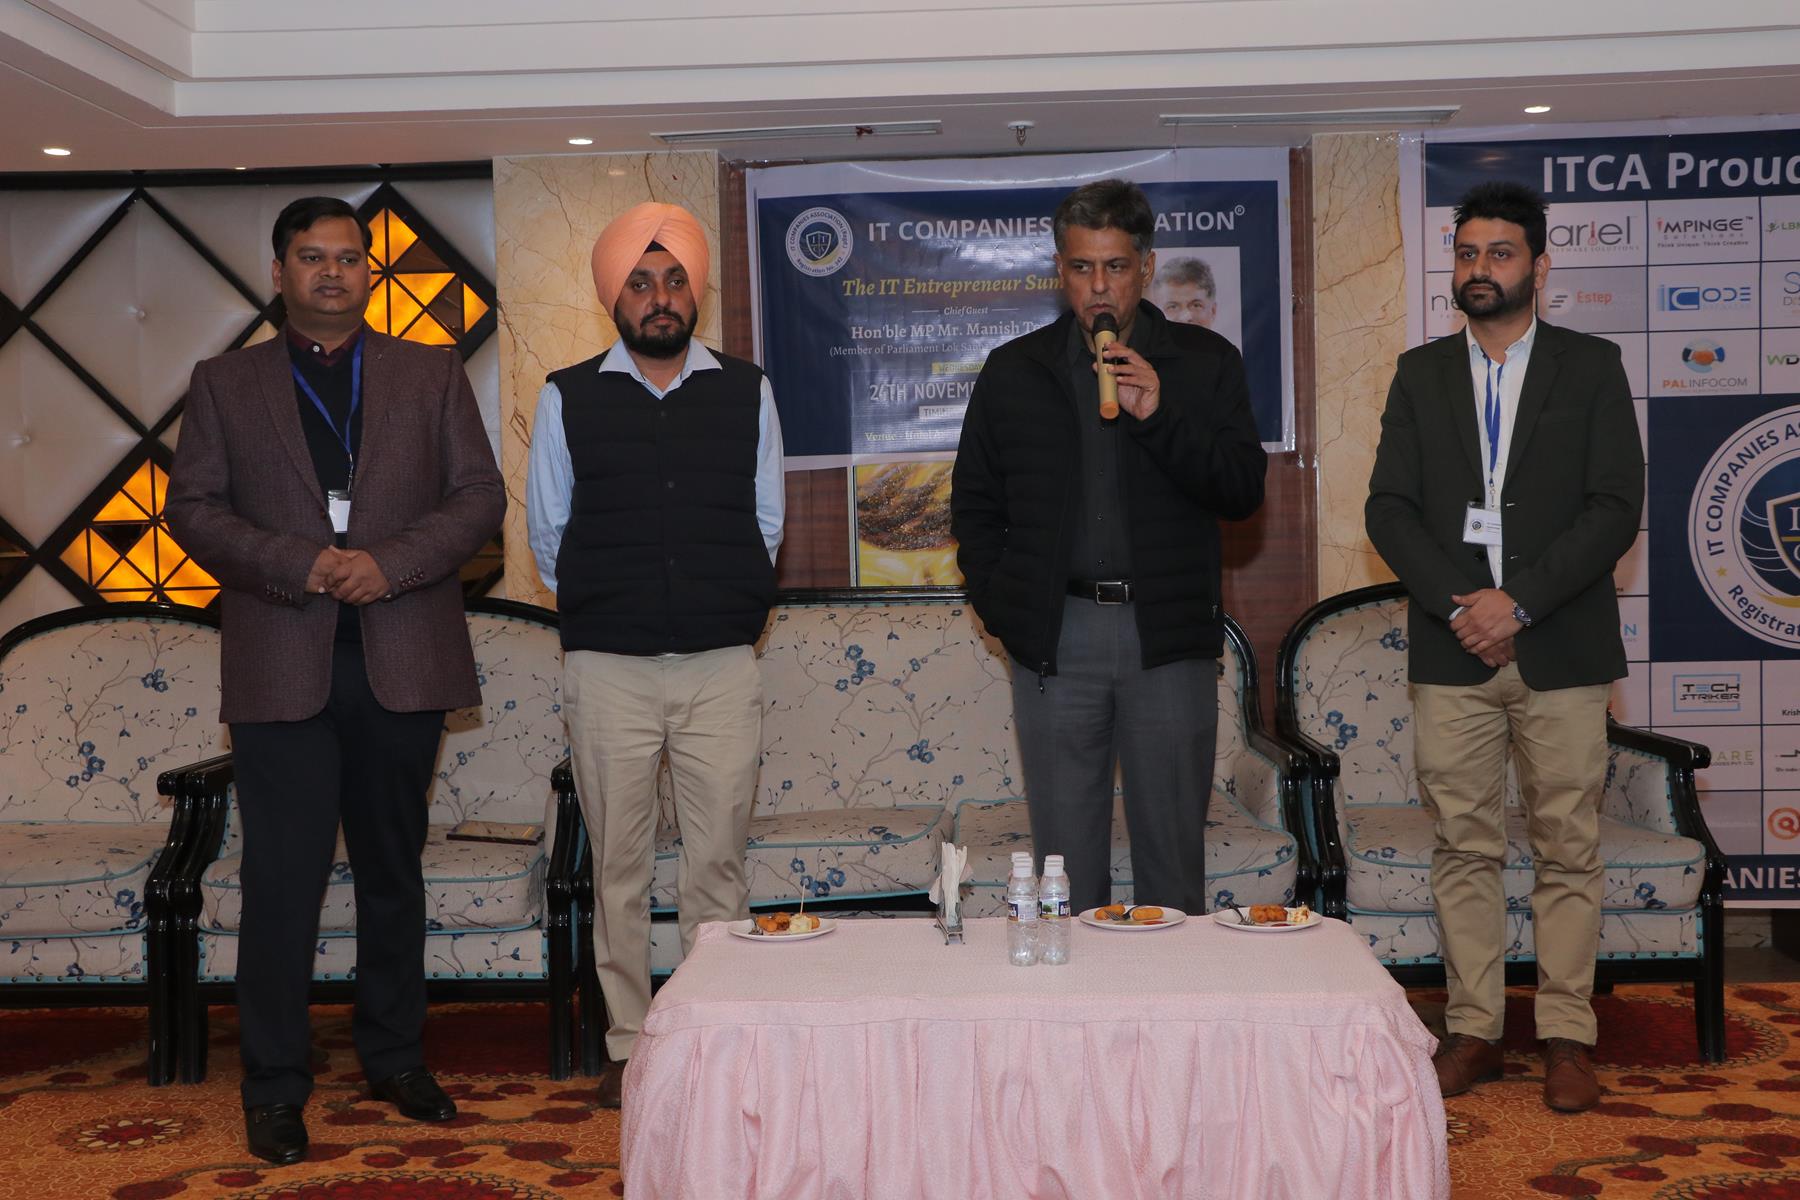 Event: IT Entrepreneur Summit at Mohali 24 Nov 2021